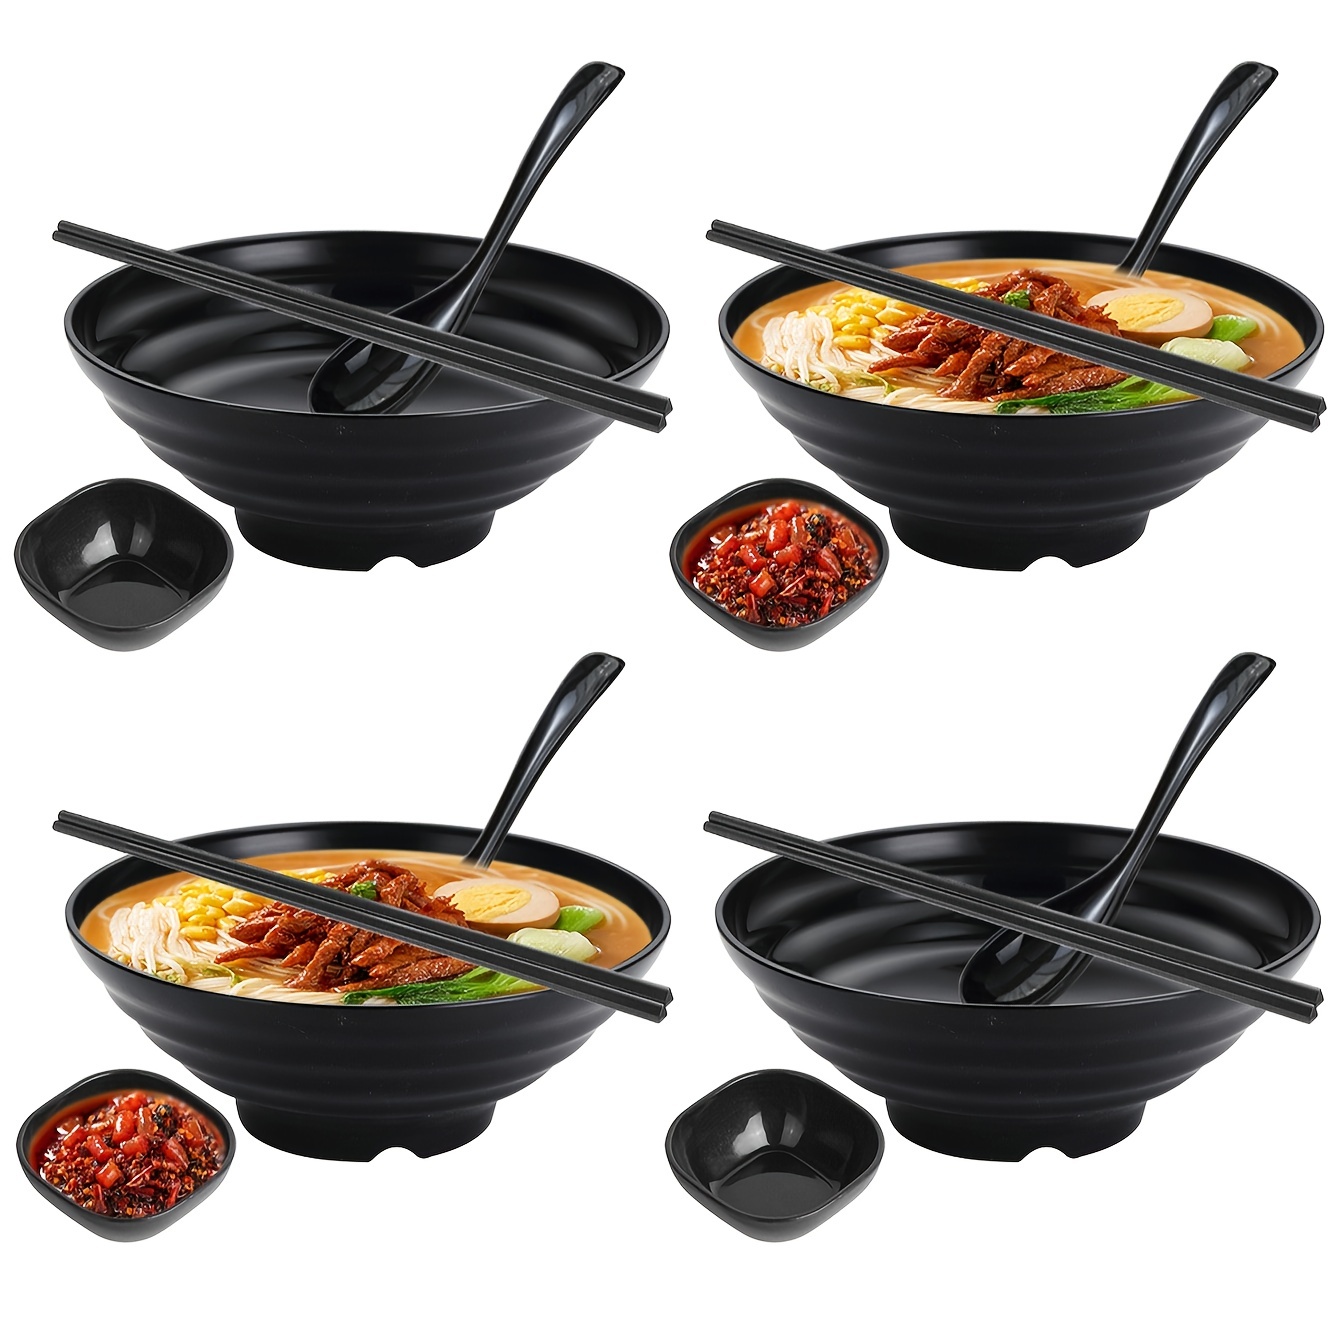 

1 Set 19/21/23cm Ramen Bowl Set With Chopsticks Spoon Saucer, For Soup Rice Noodles, For Home Kitchen Ramen Shop Restaurant Hotel, Kitchen Supplies, Tableware Accessories